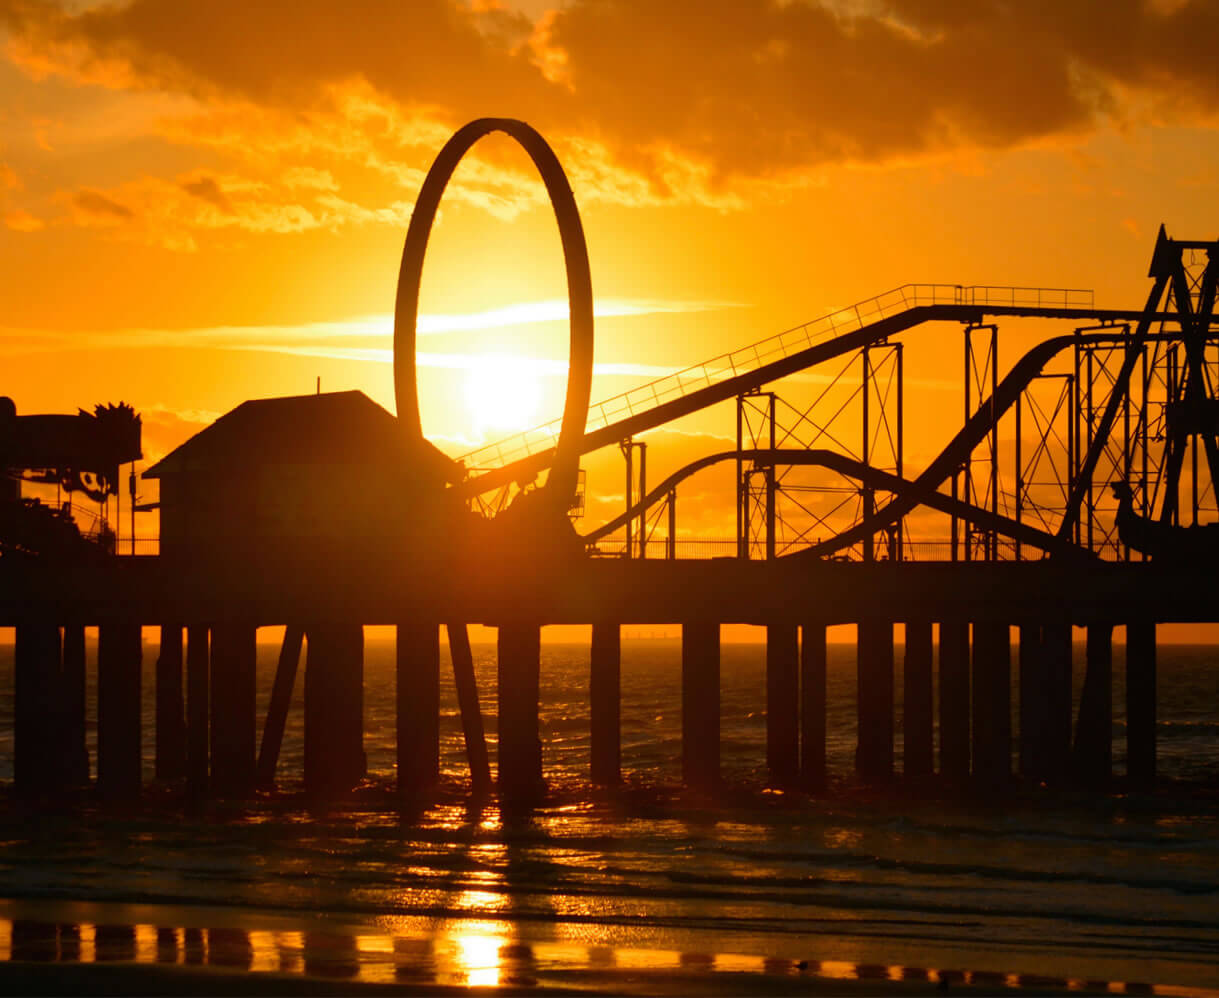 coaster at sunset